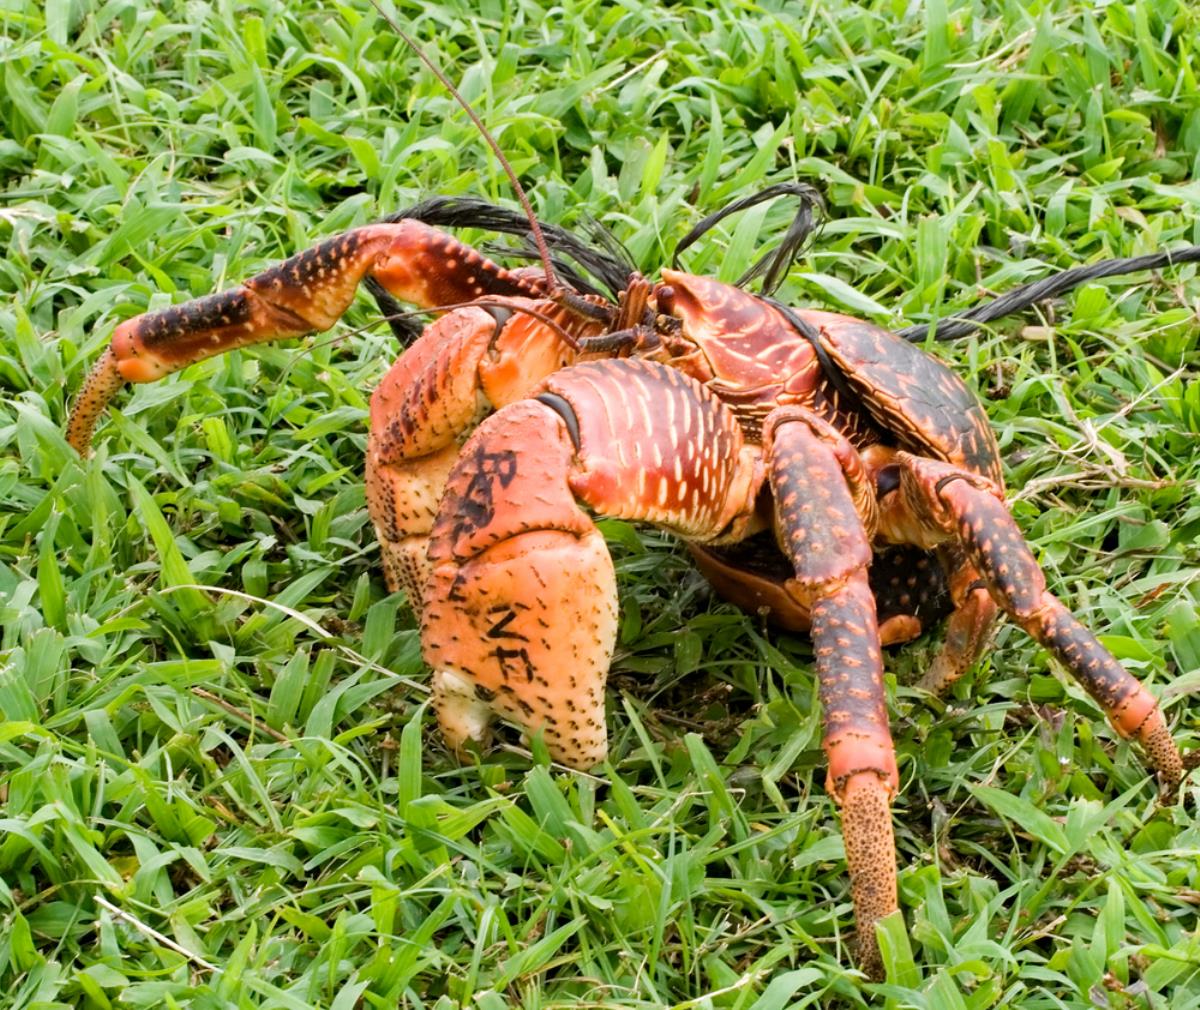 The Coconut Crab